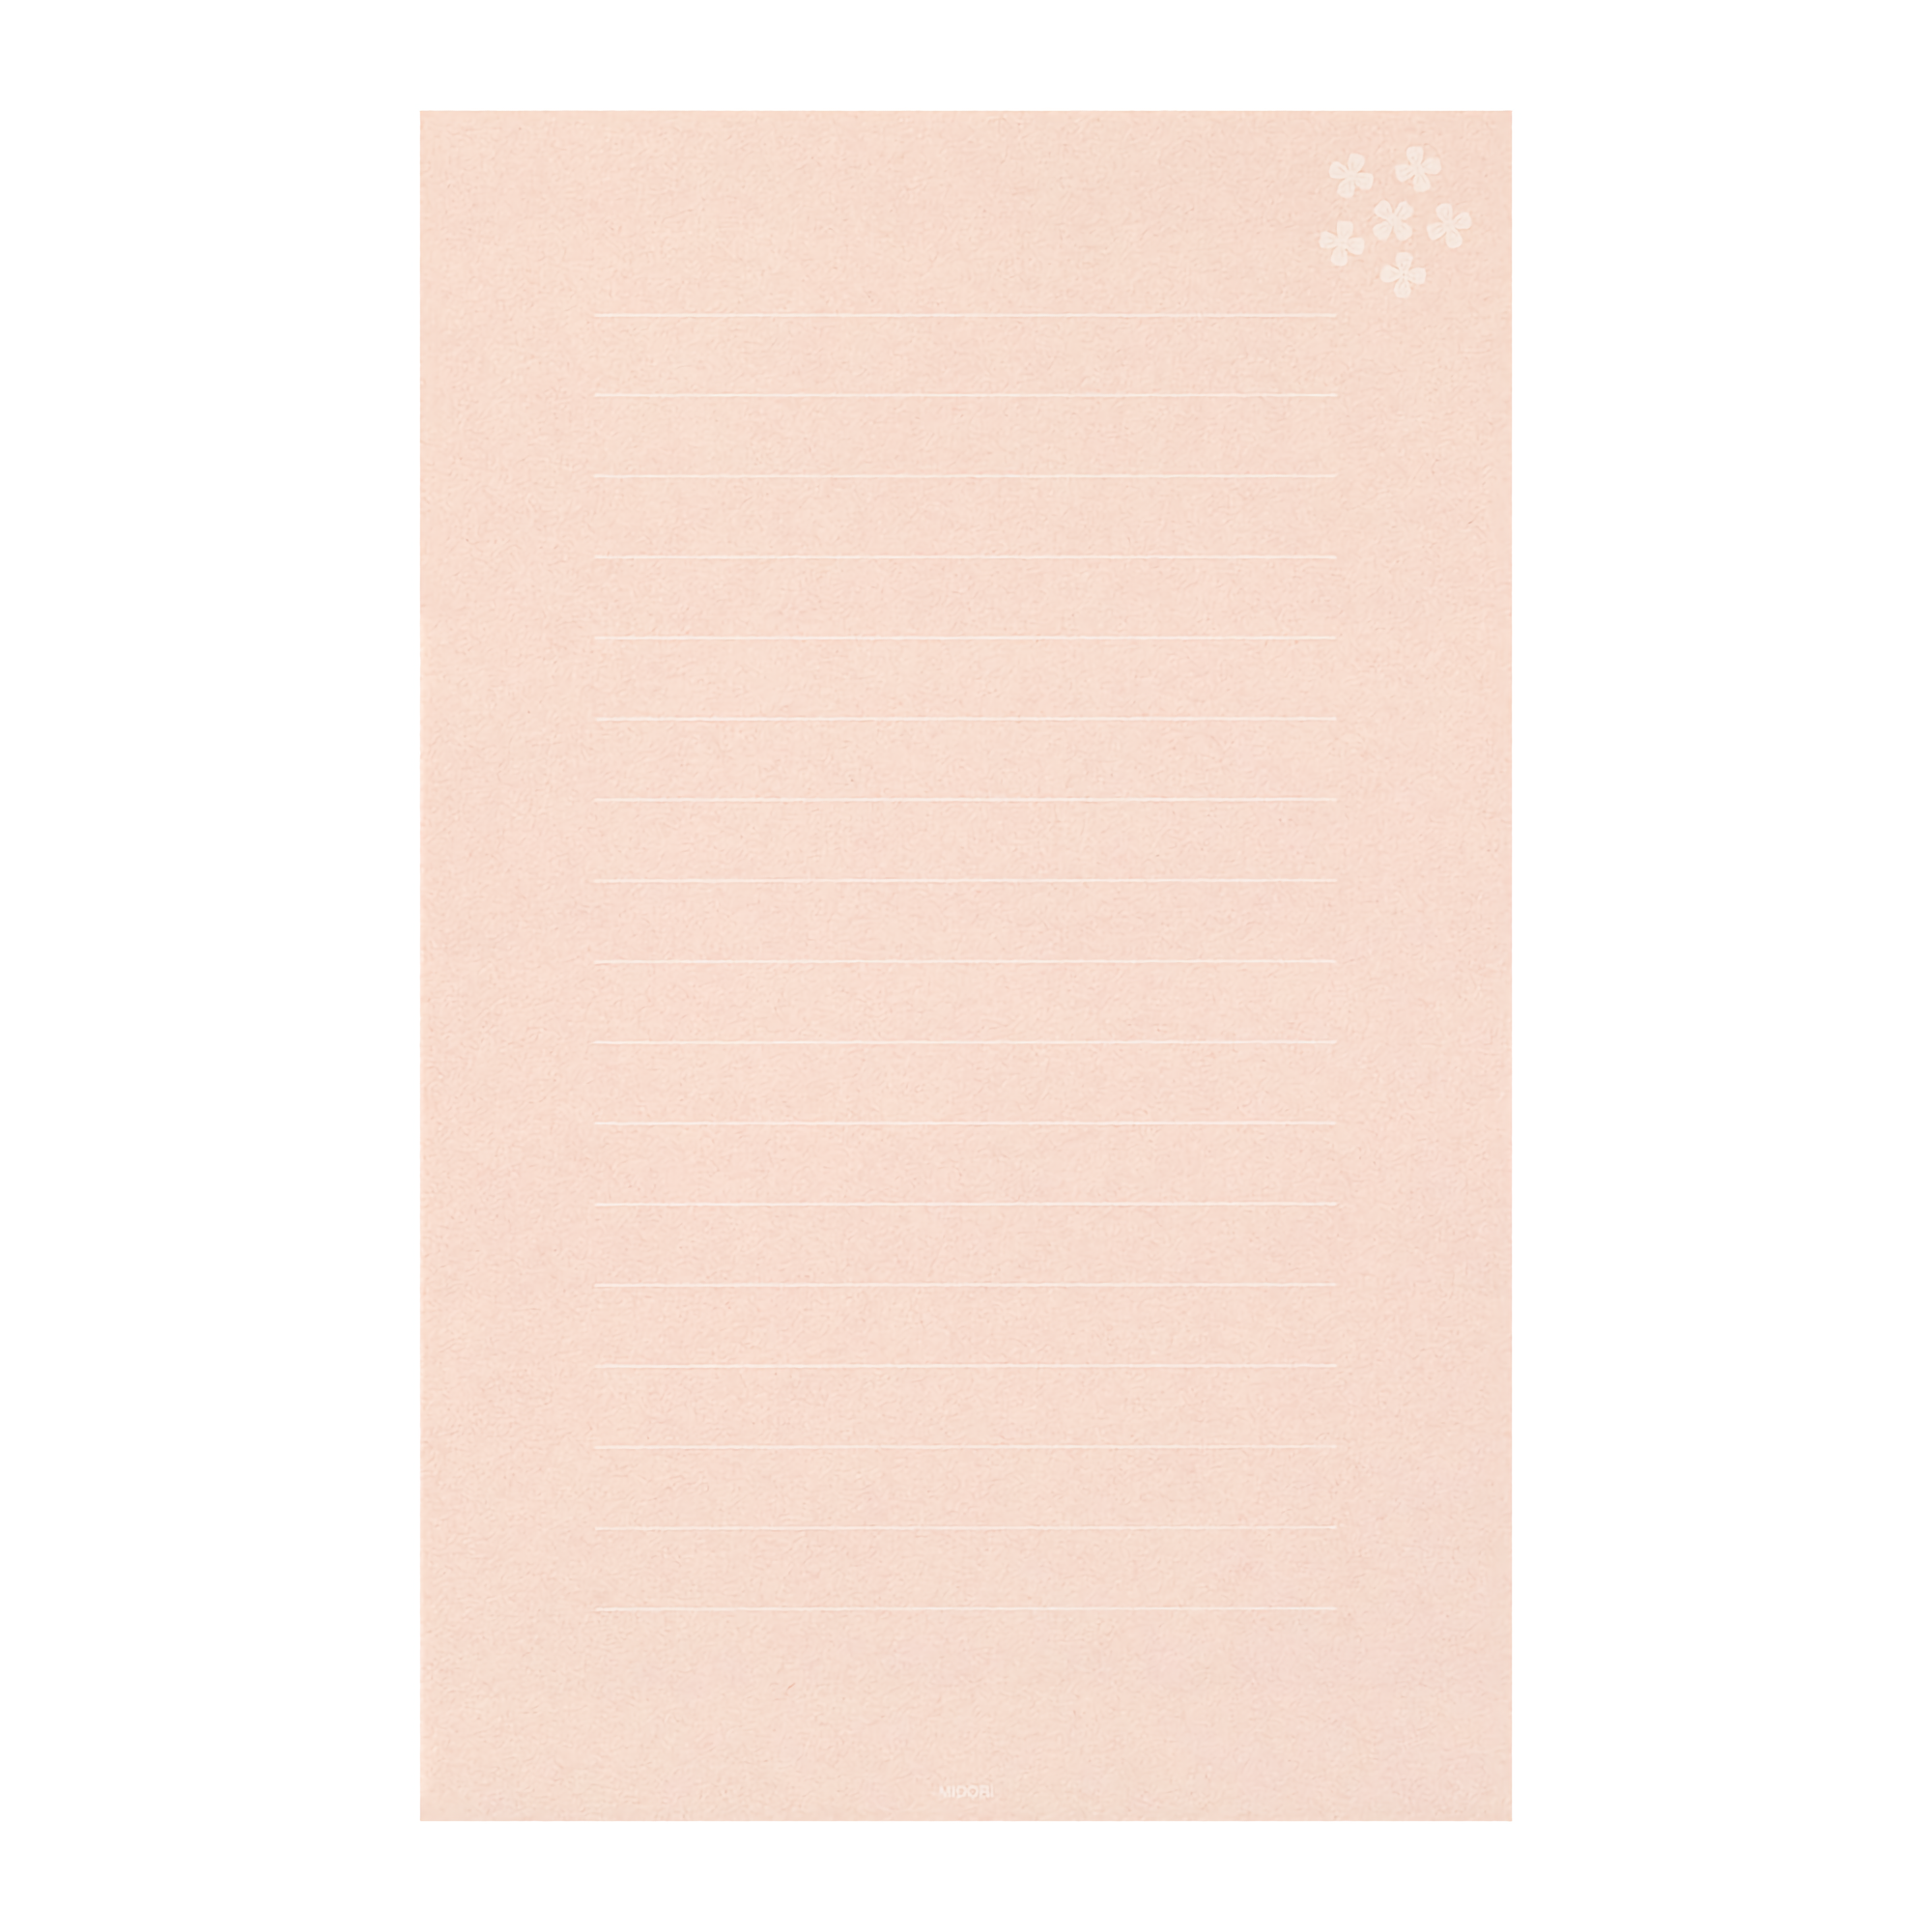 Midori Letter Set Openwork Floral Pink